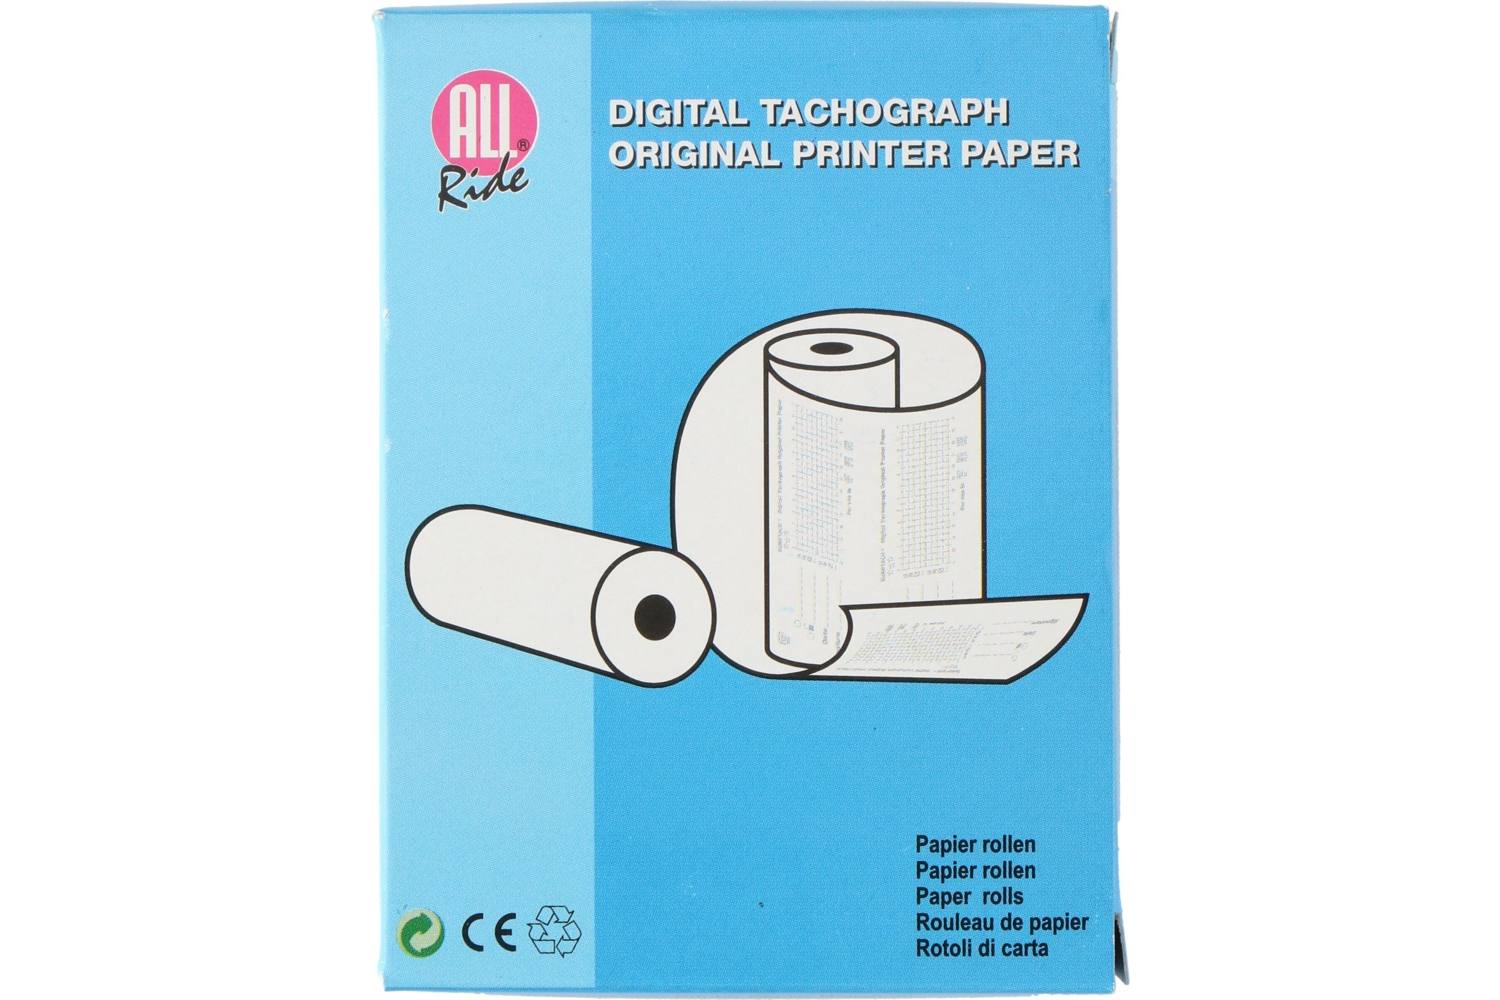 Digital tacho paper, AllRide, on roll 2